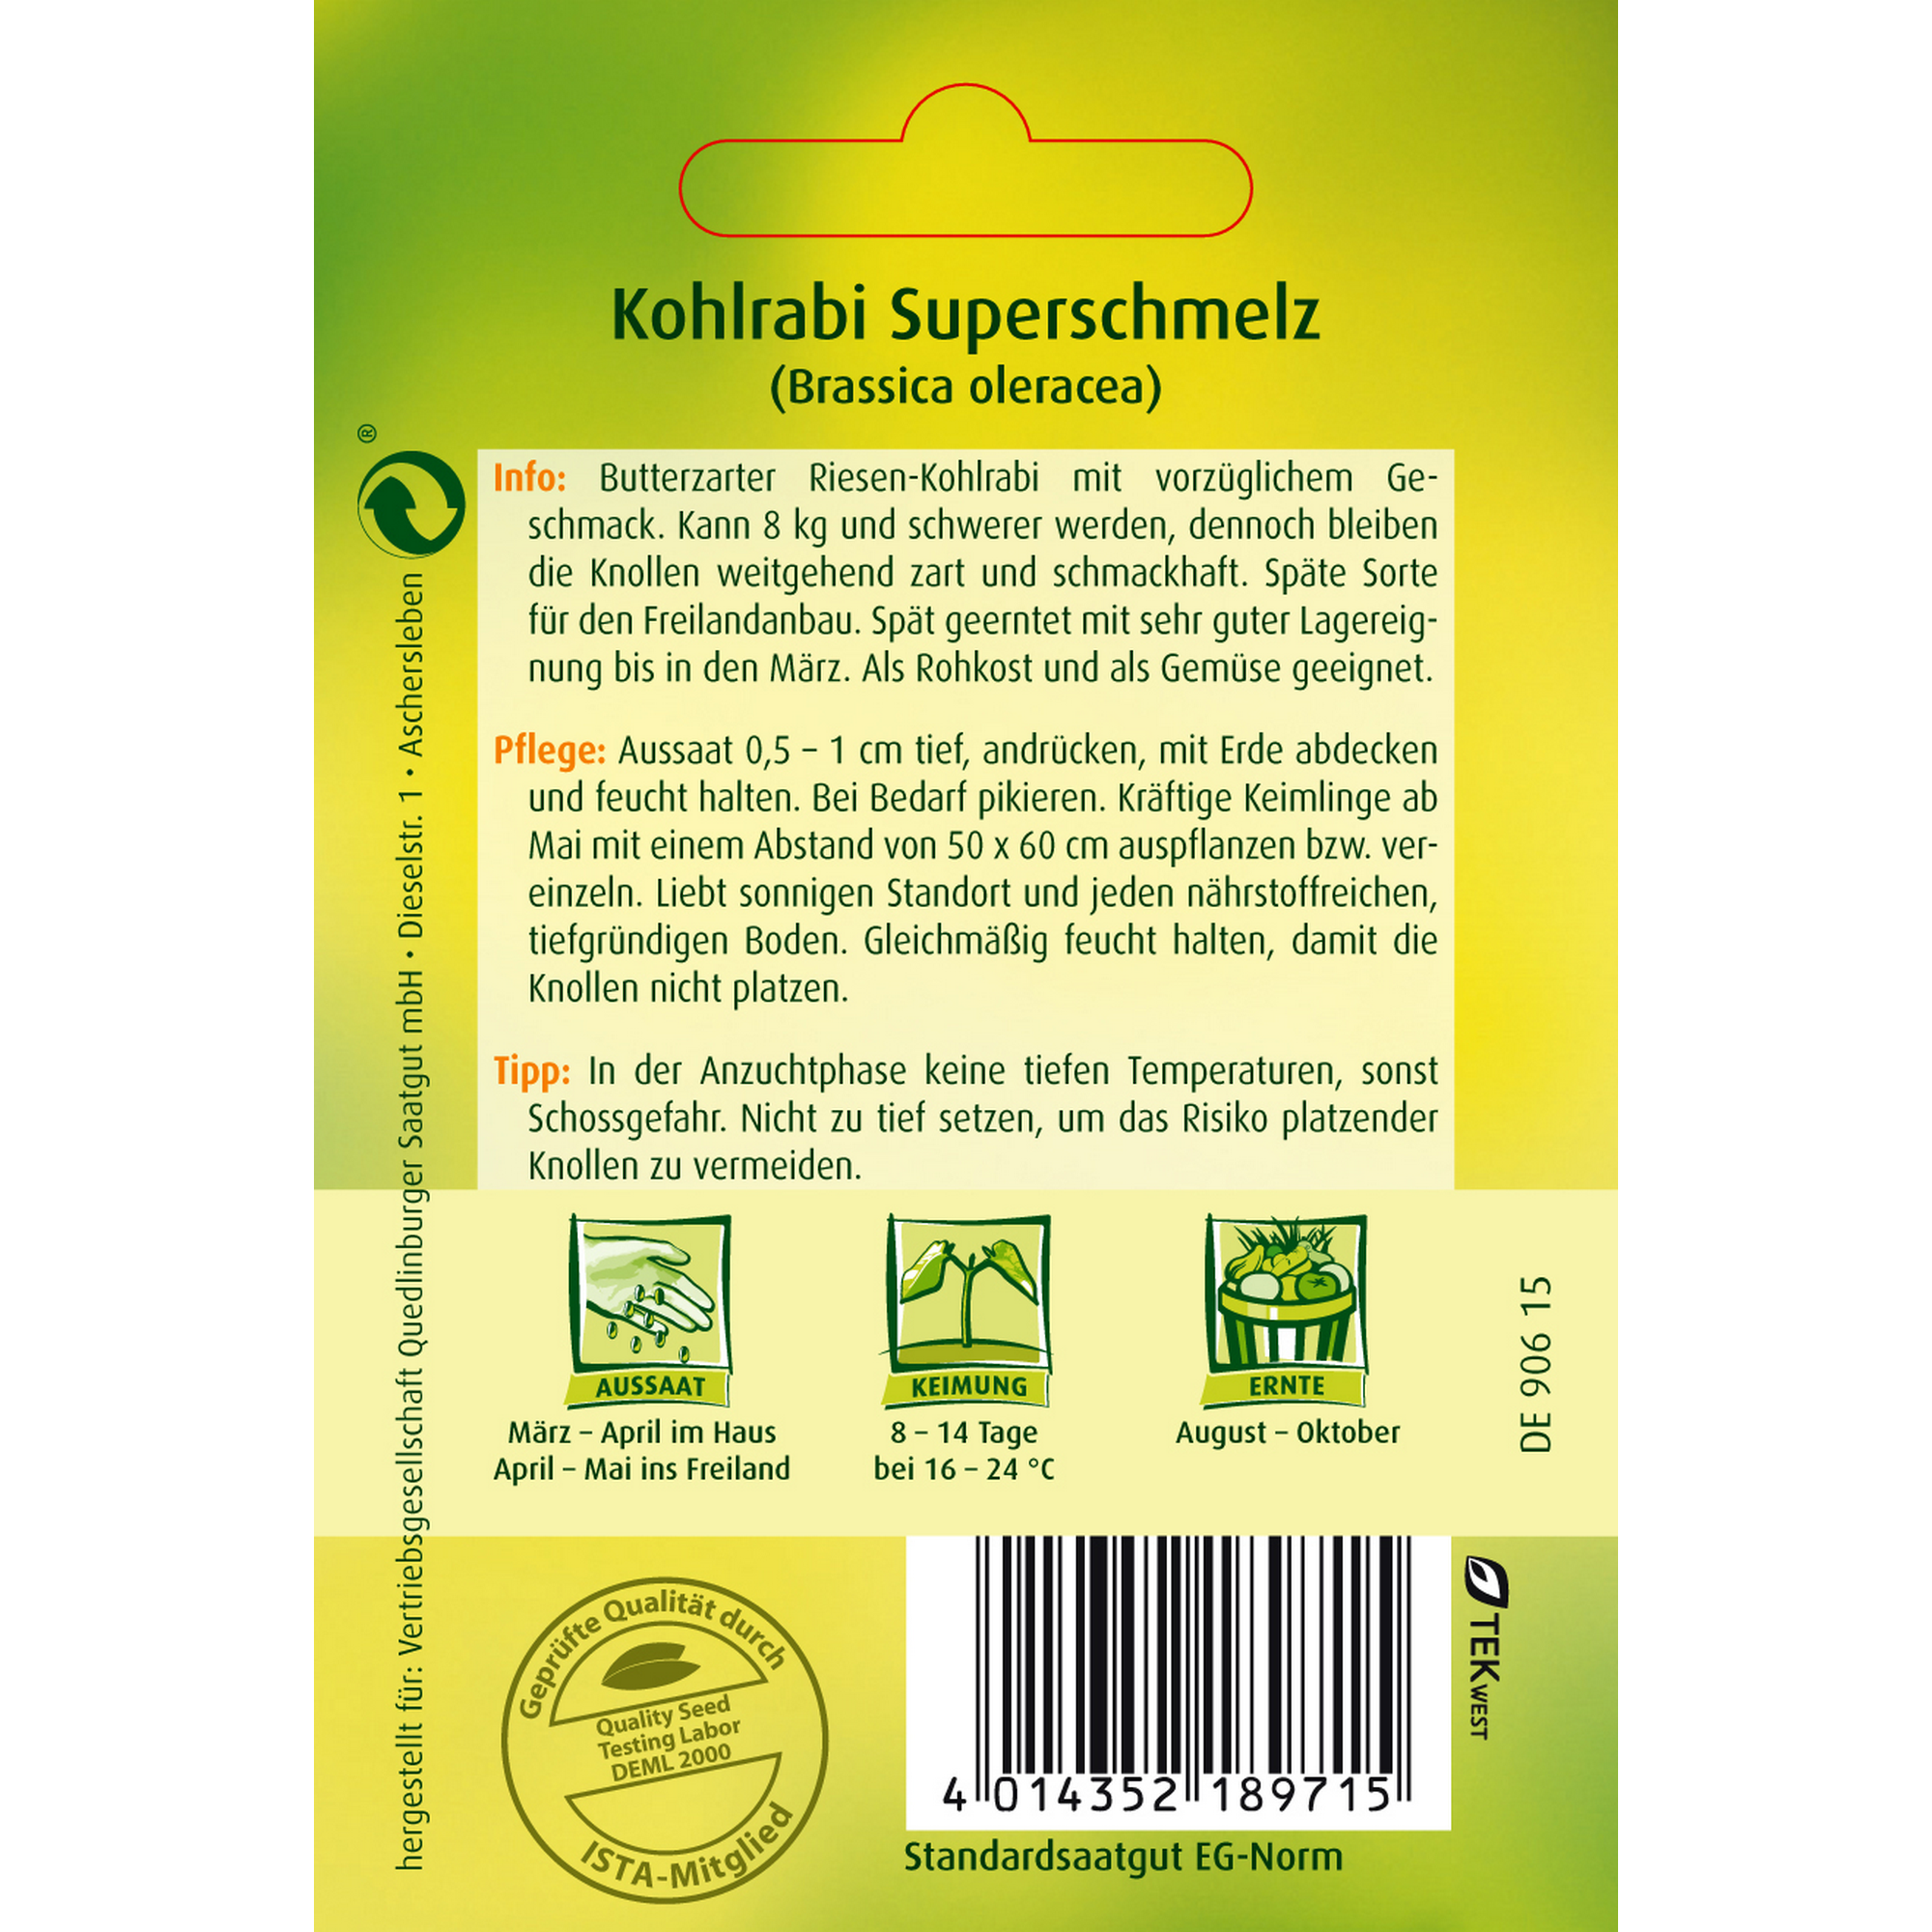 Kohlrabi 'Superschmelz' + product picture